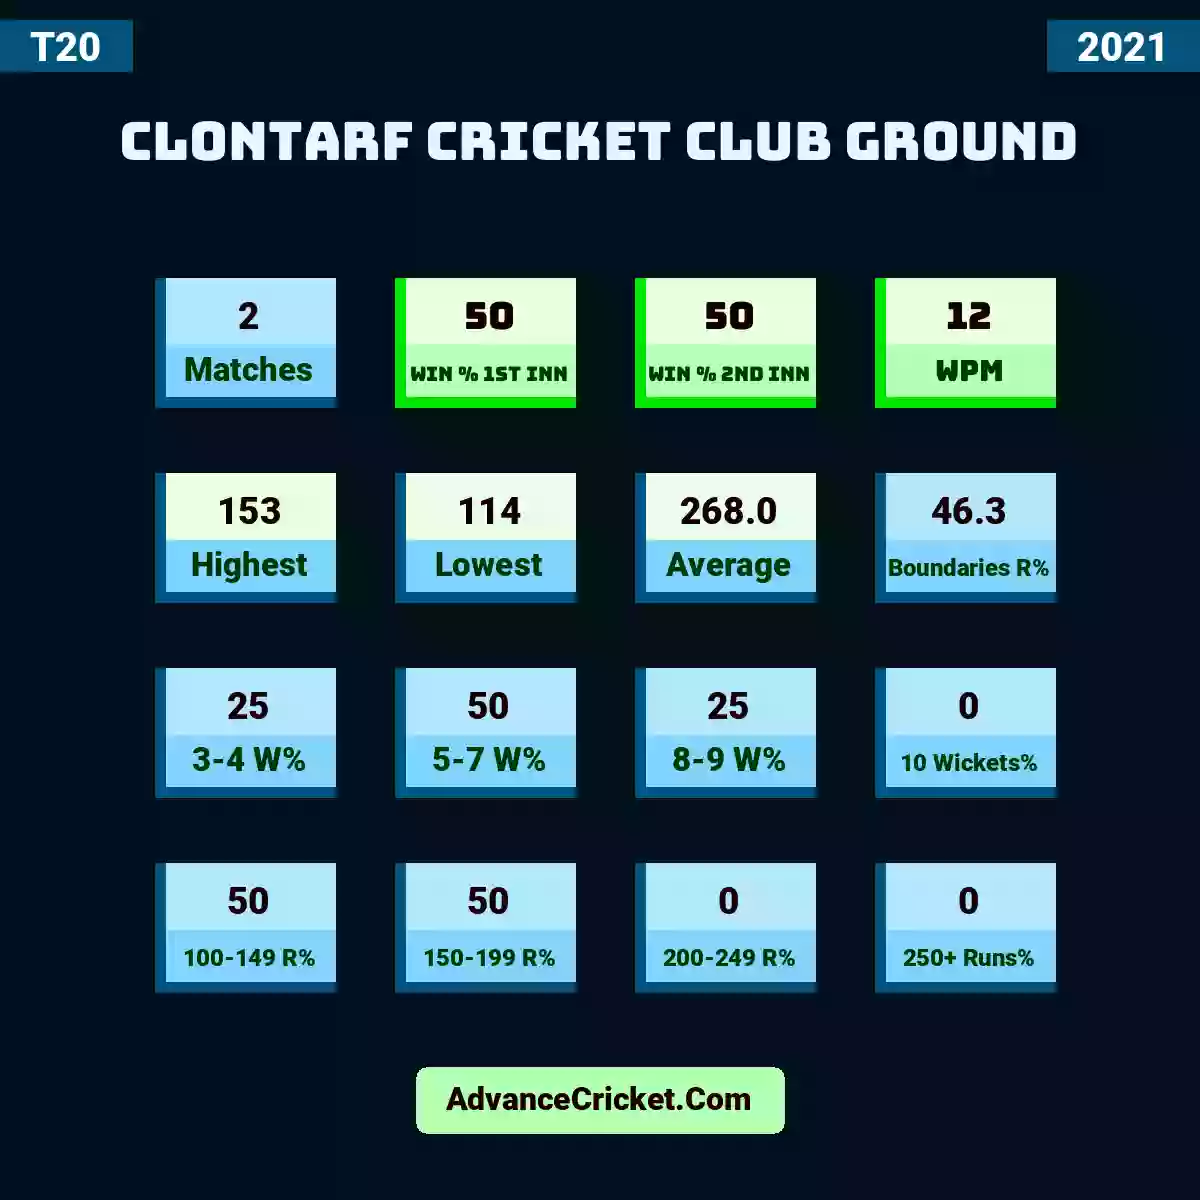 Image showing Clontarf Cricket Club Ground with Matches: 2, Win % 1st Inn: 50, Win % 2nd Inn: 50, WPM: 12, Highest: 153, Lowest: 114, Average: 268.0, Boundaries R%: 46.3, 3-4 W%: 25, 5-7 W%: 50, 8-9 W%: 25, 10 Wickets%: 0, 100-149 R%: 50, 150-199 R%: 50, 200-249 R%: 0, 250+ Runs%: 0.